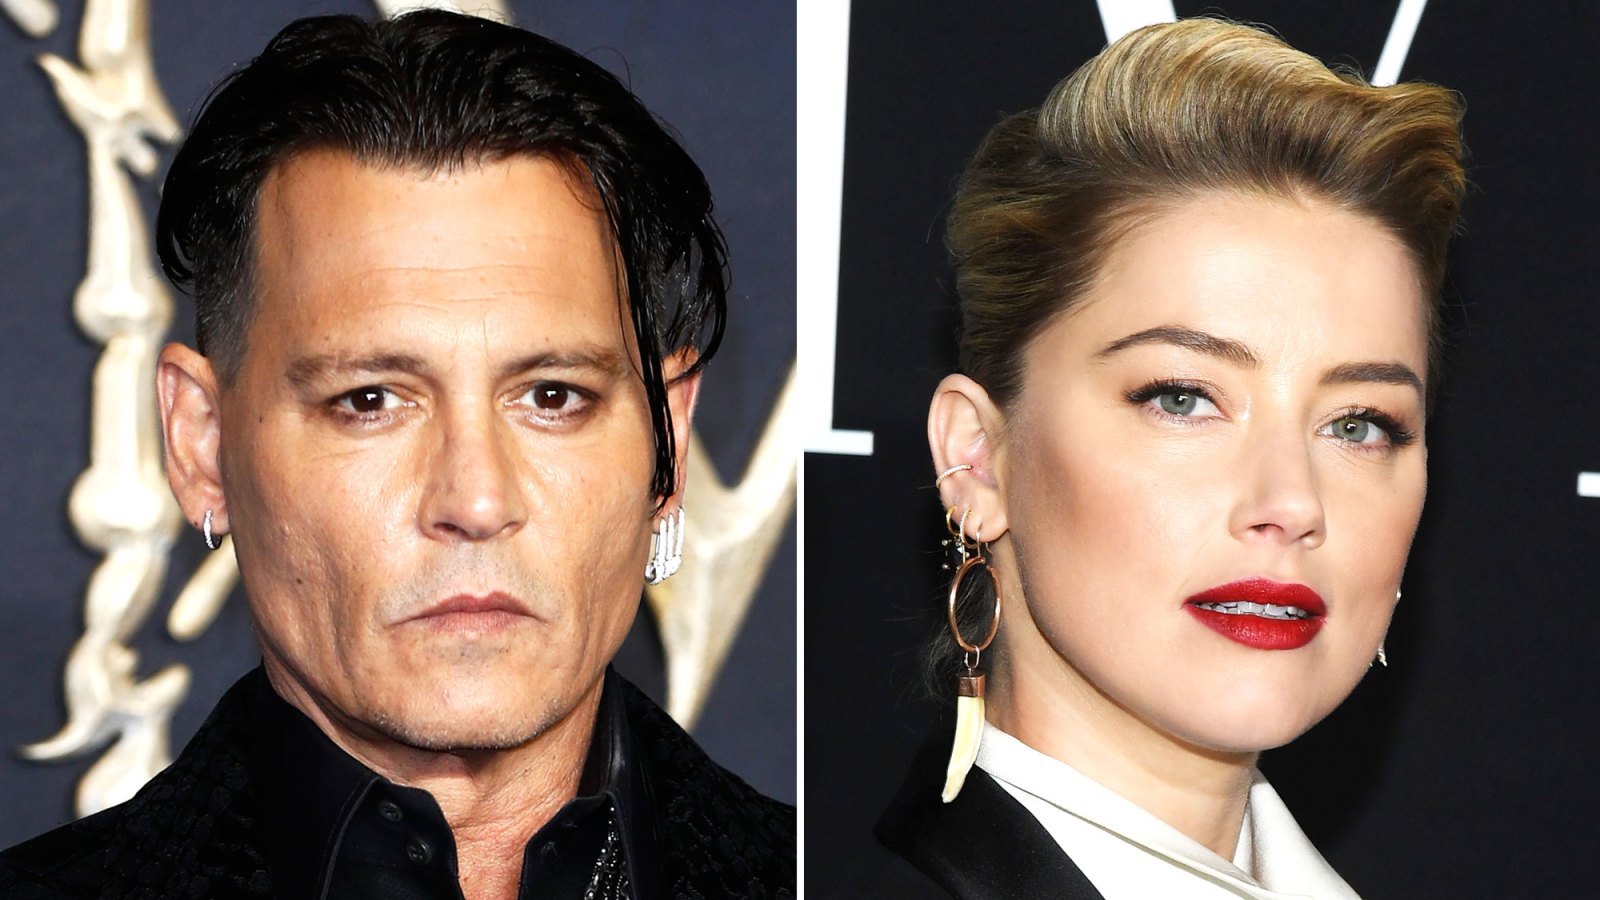 Johnny Depp Files $50 Million Defamation Suit Against Ex-Wife Amber Heard